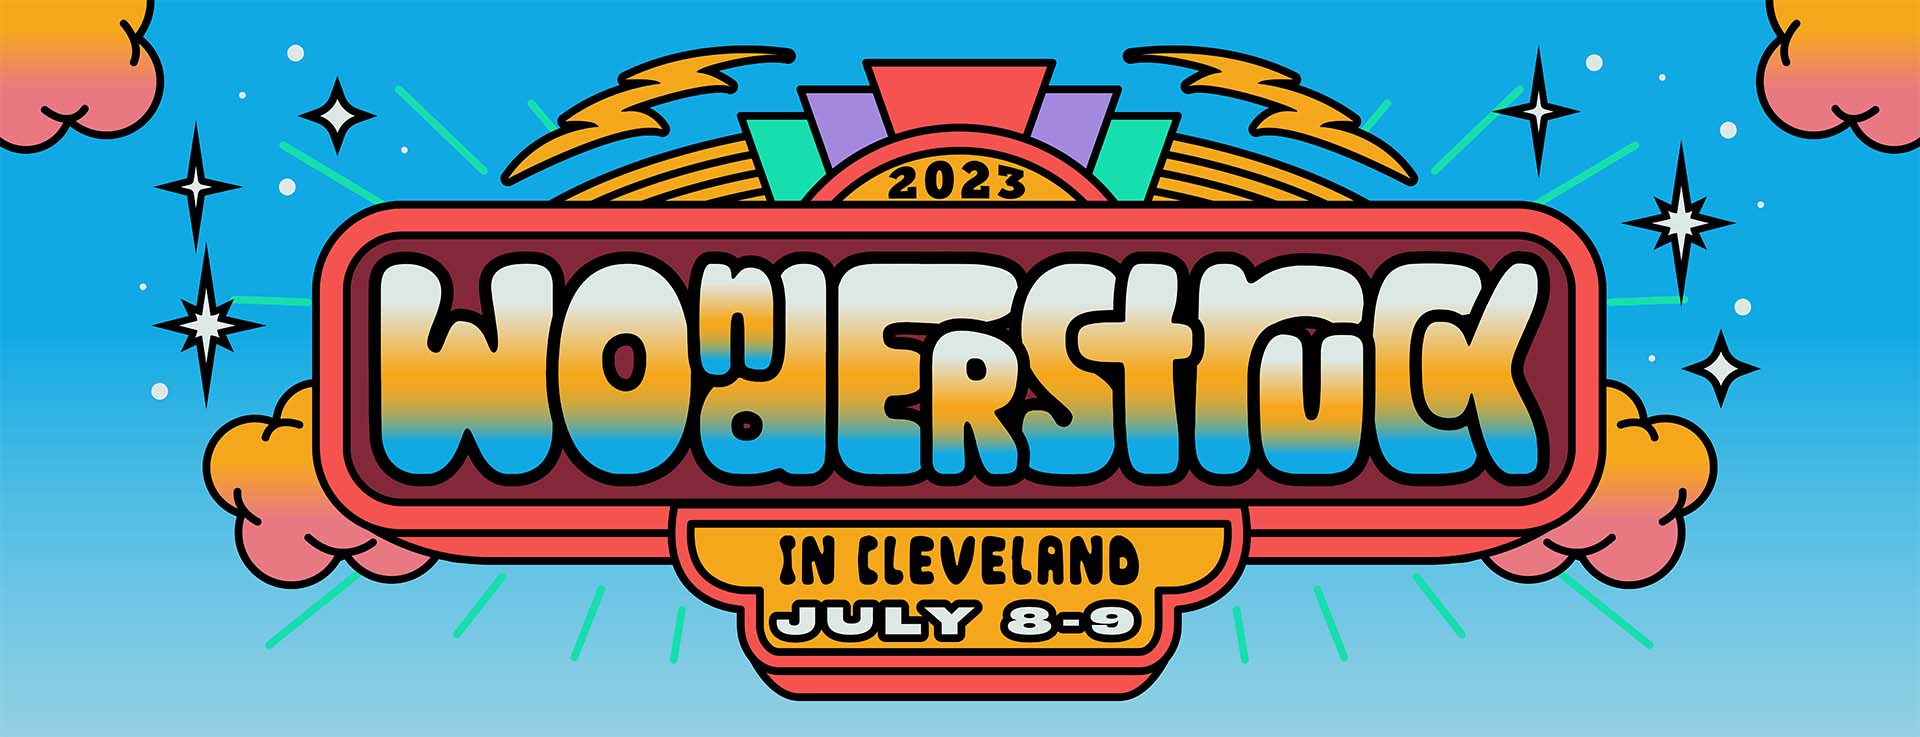 Music & Arts Festival Cleveland, OH, July 89, 2023 WonderStruck